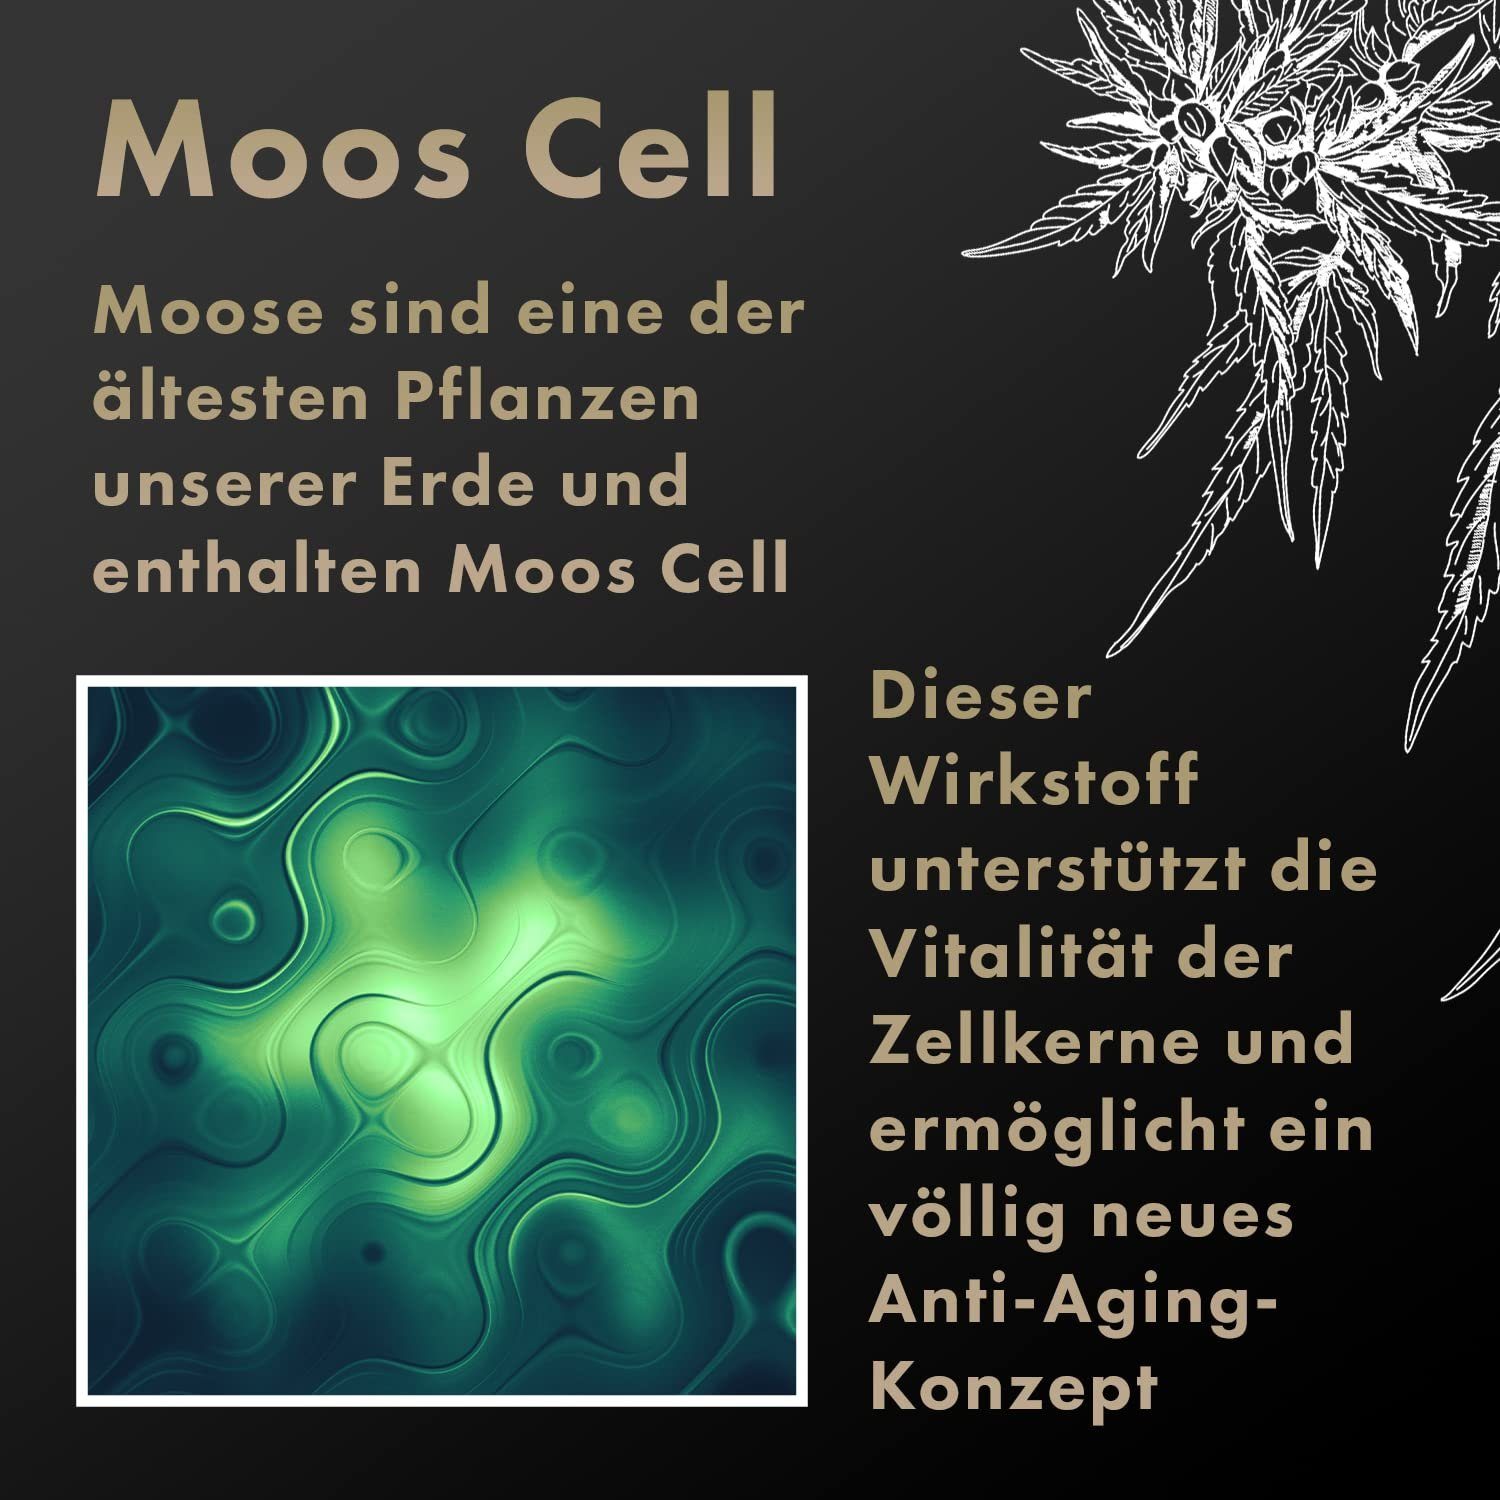 Dr. 500 Moos mit 50 ml "Black CBD mit Edition" mg Cell, Berger Nachtcreme Nachtcreme